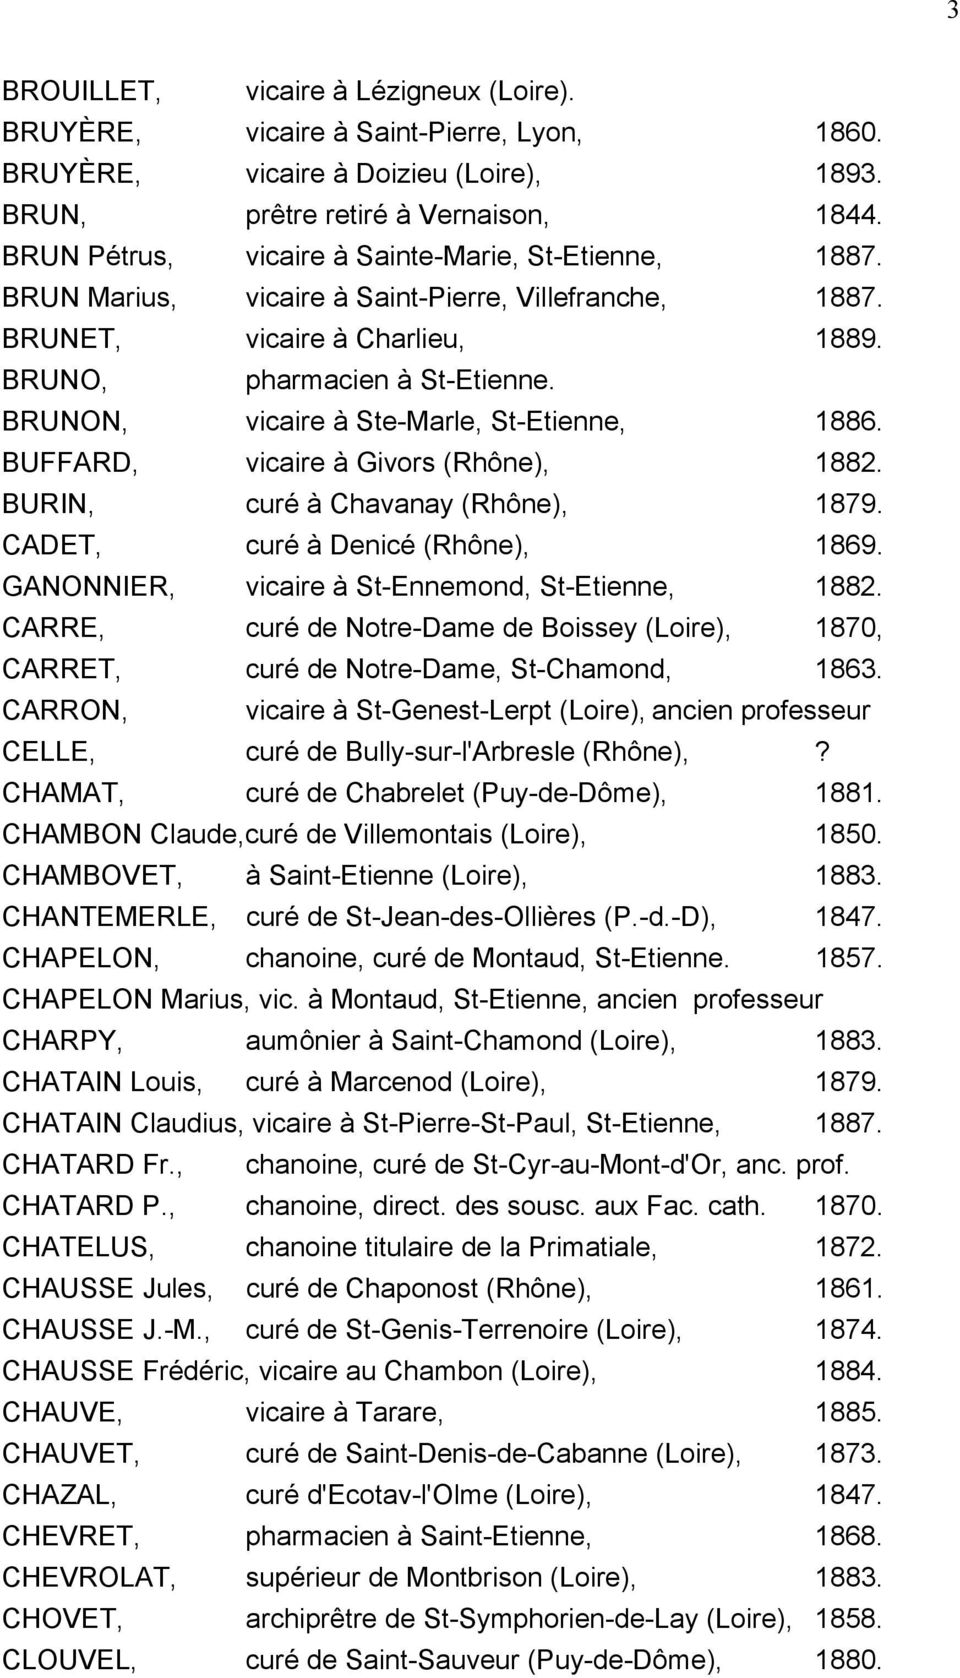 BRUNON, vicaire à Ste-Marle, St-Etienne, 1886. BUFFARD, vicaire à Givors (Rhône), 1882. BURIN, curé à Chavanay (Rhône), 1879. CADET, curé à Denicé (Rhône), 1869.